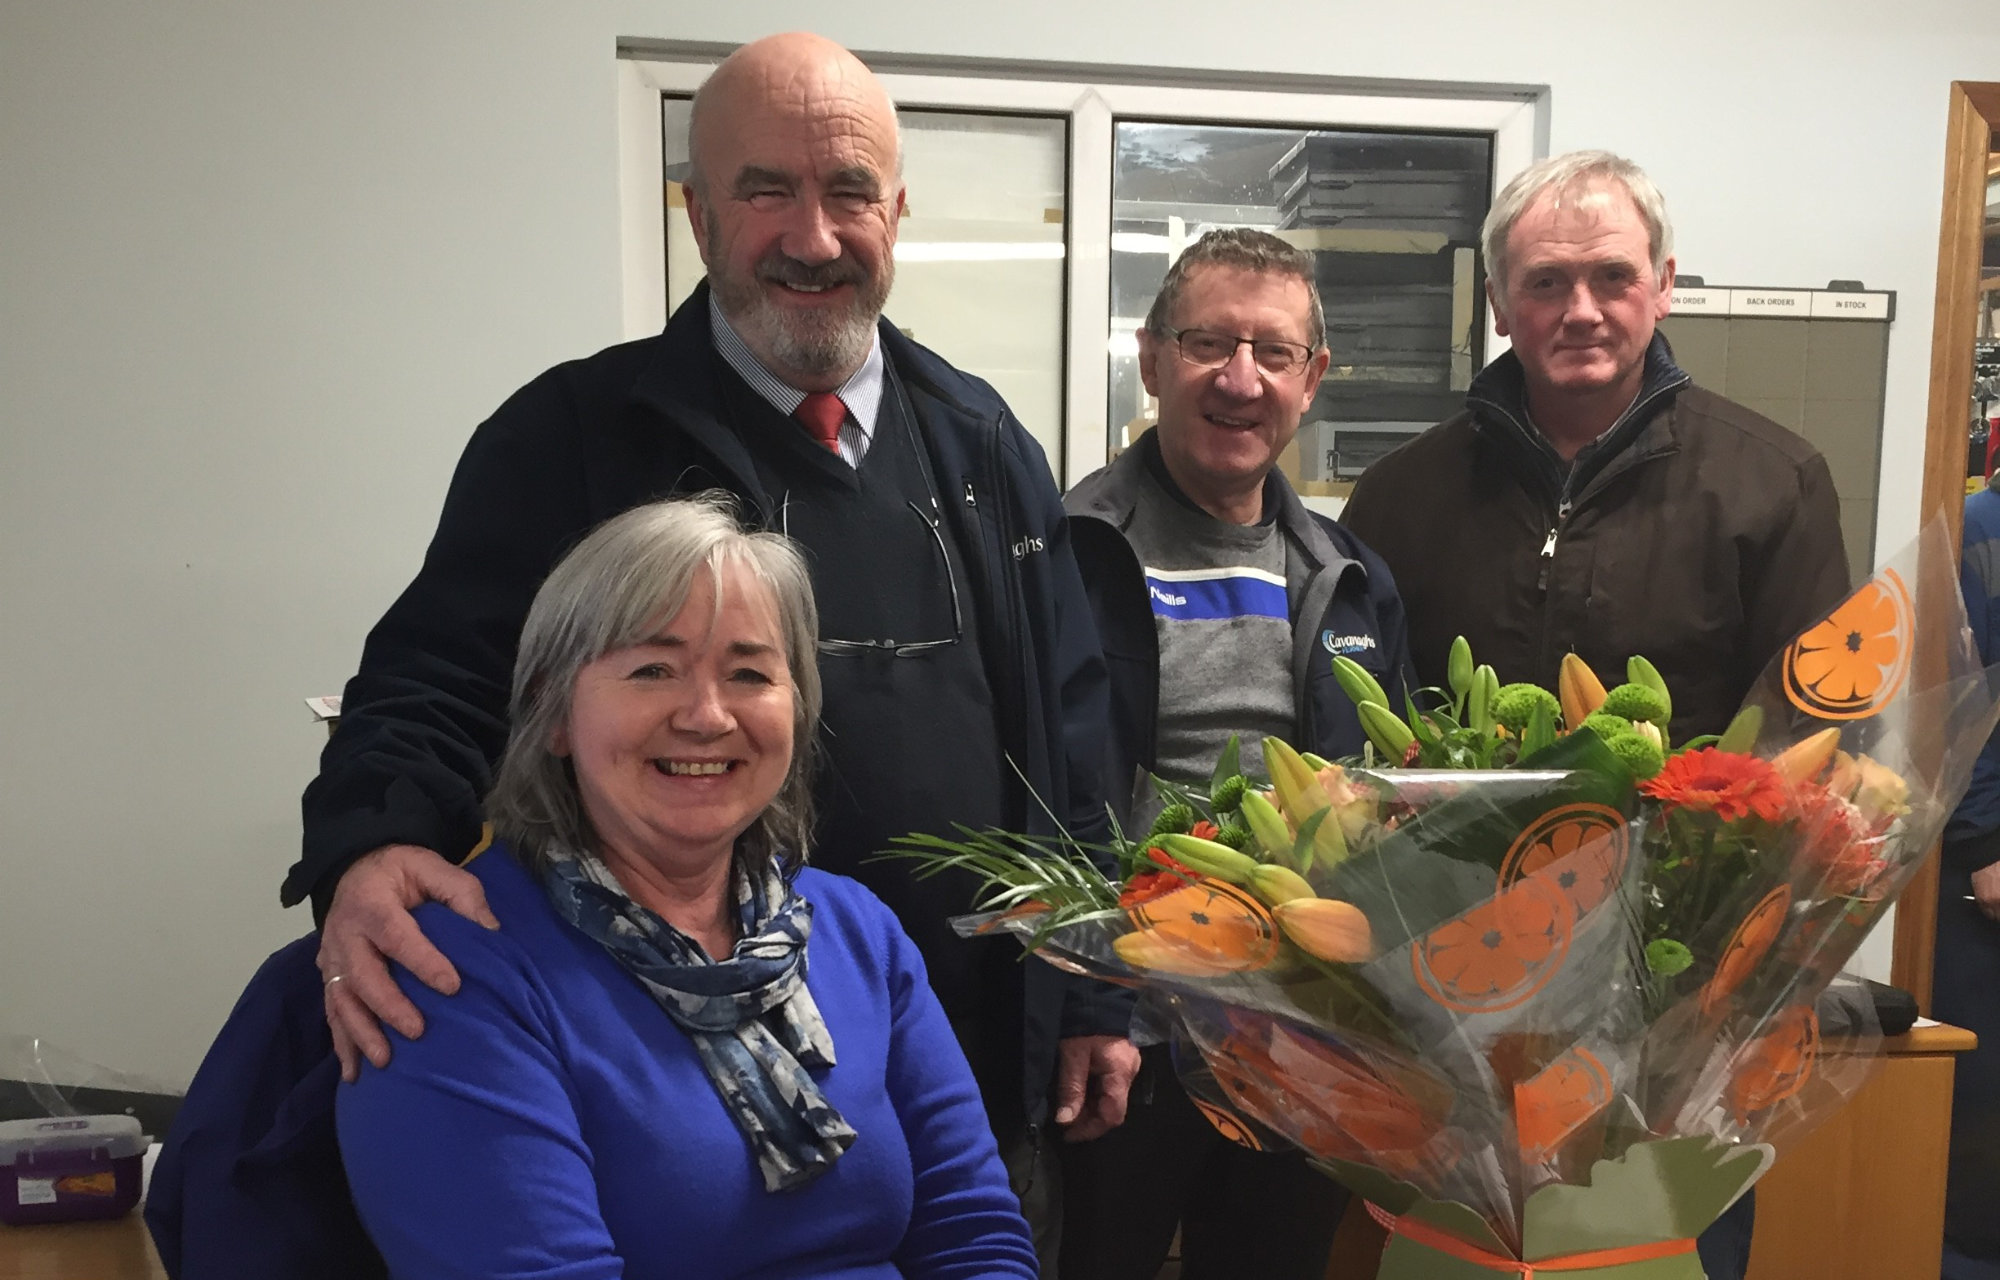 Jean Joyce celebrates 40 years at Cavanagh's of Fermoy